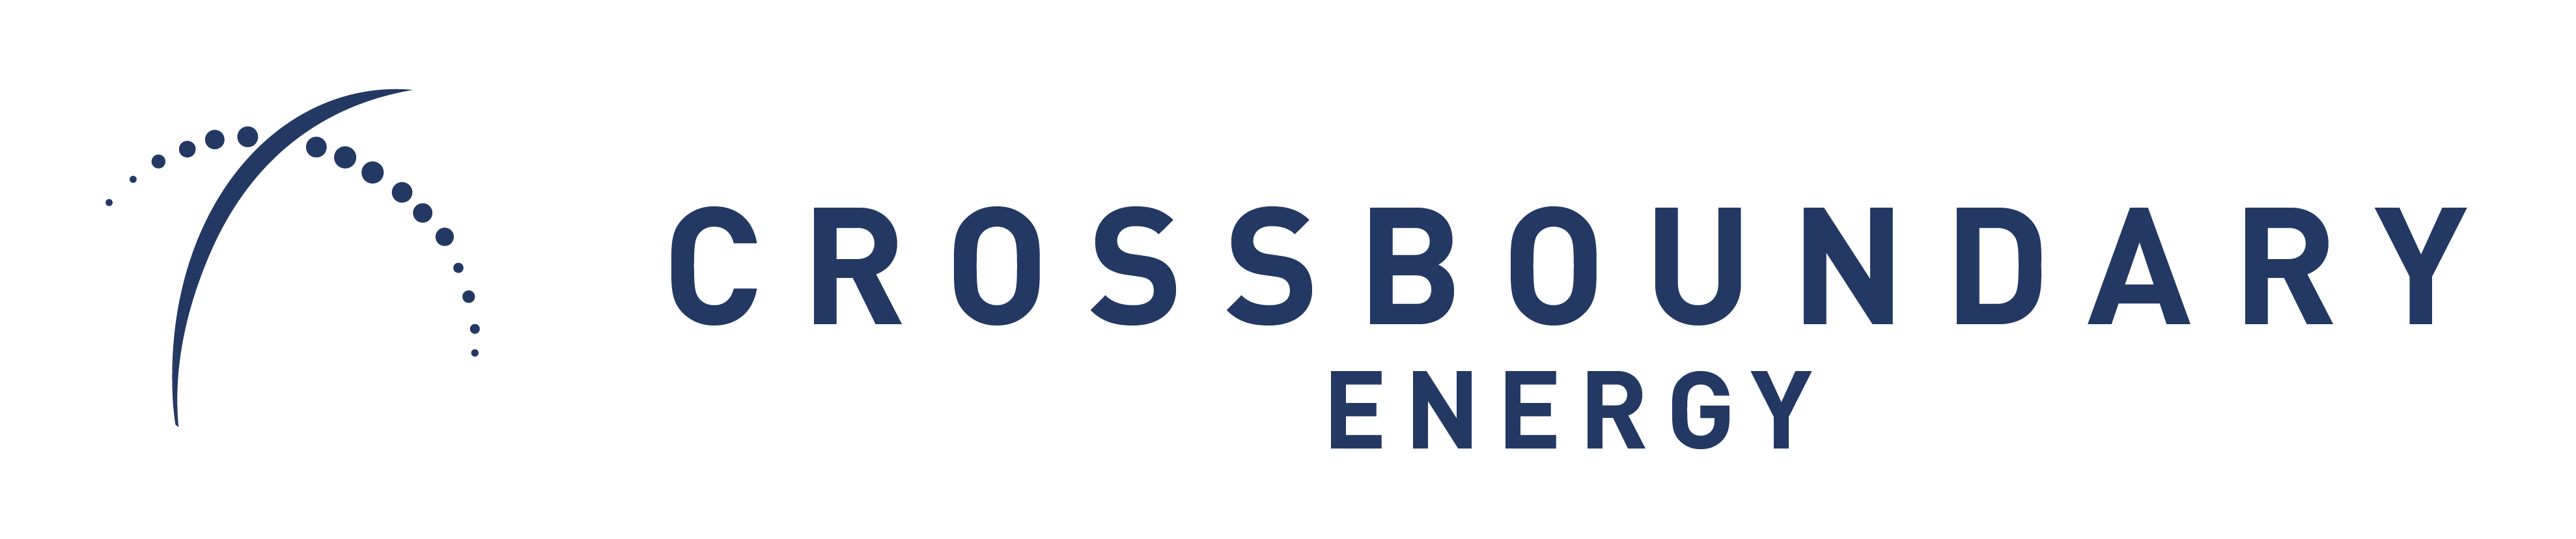 CrossBoundary Energy Management